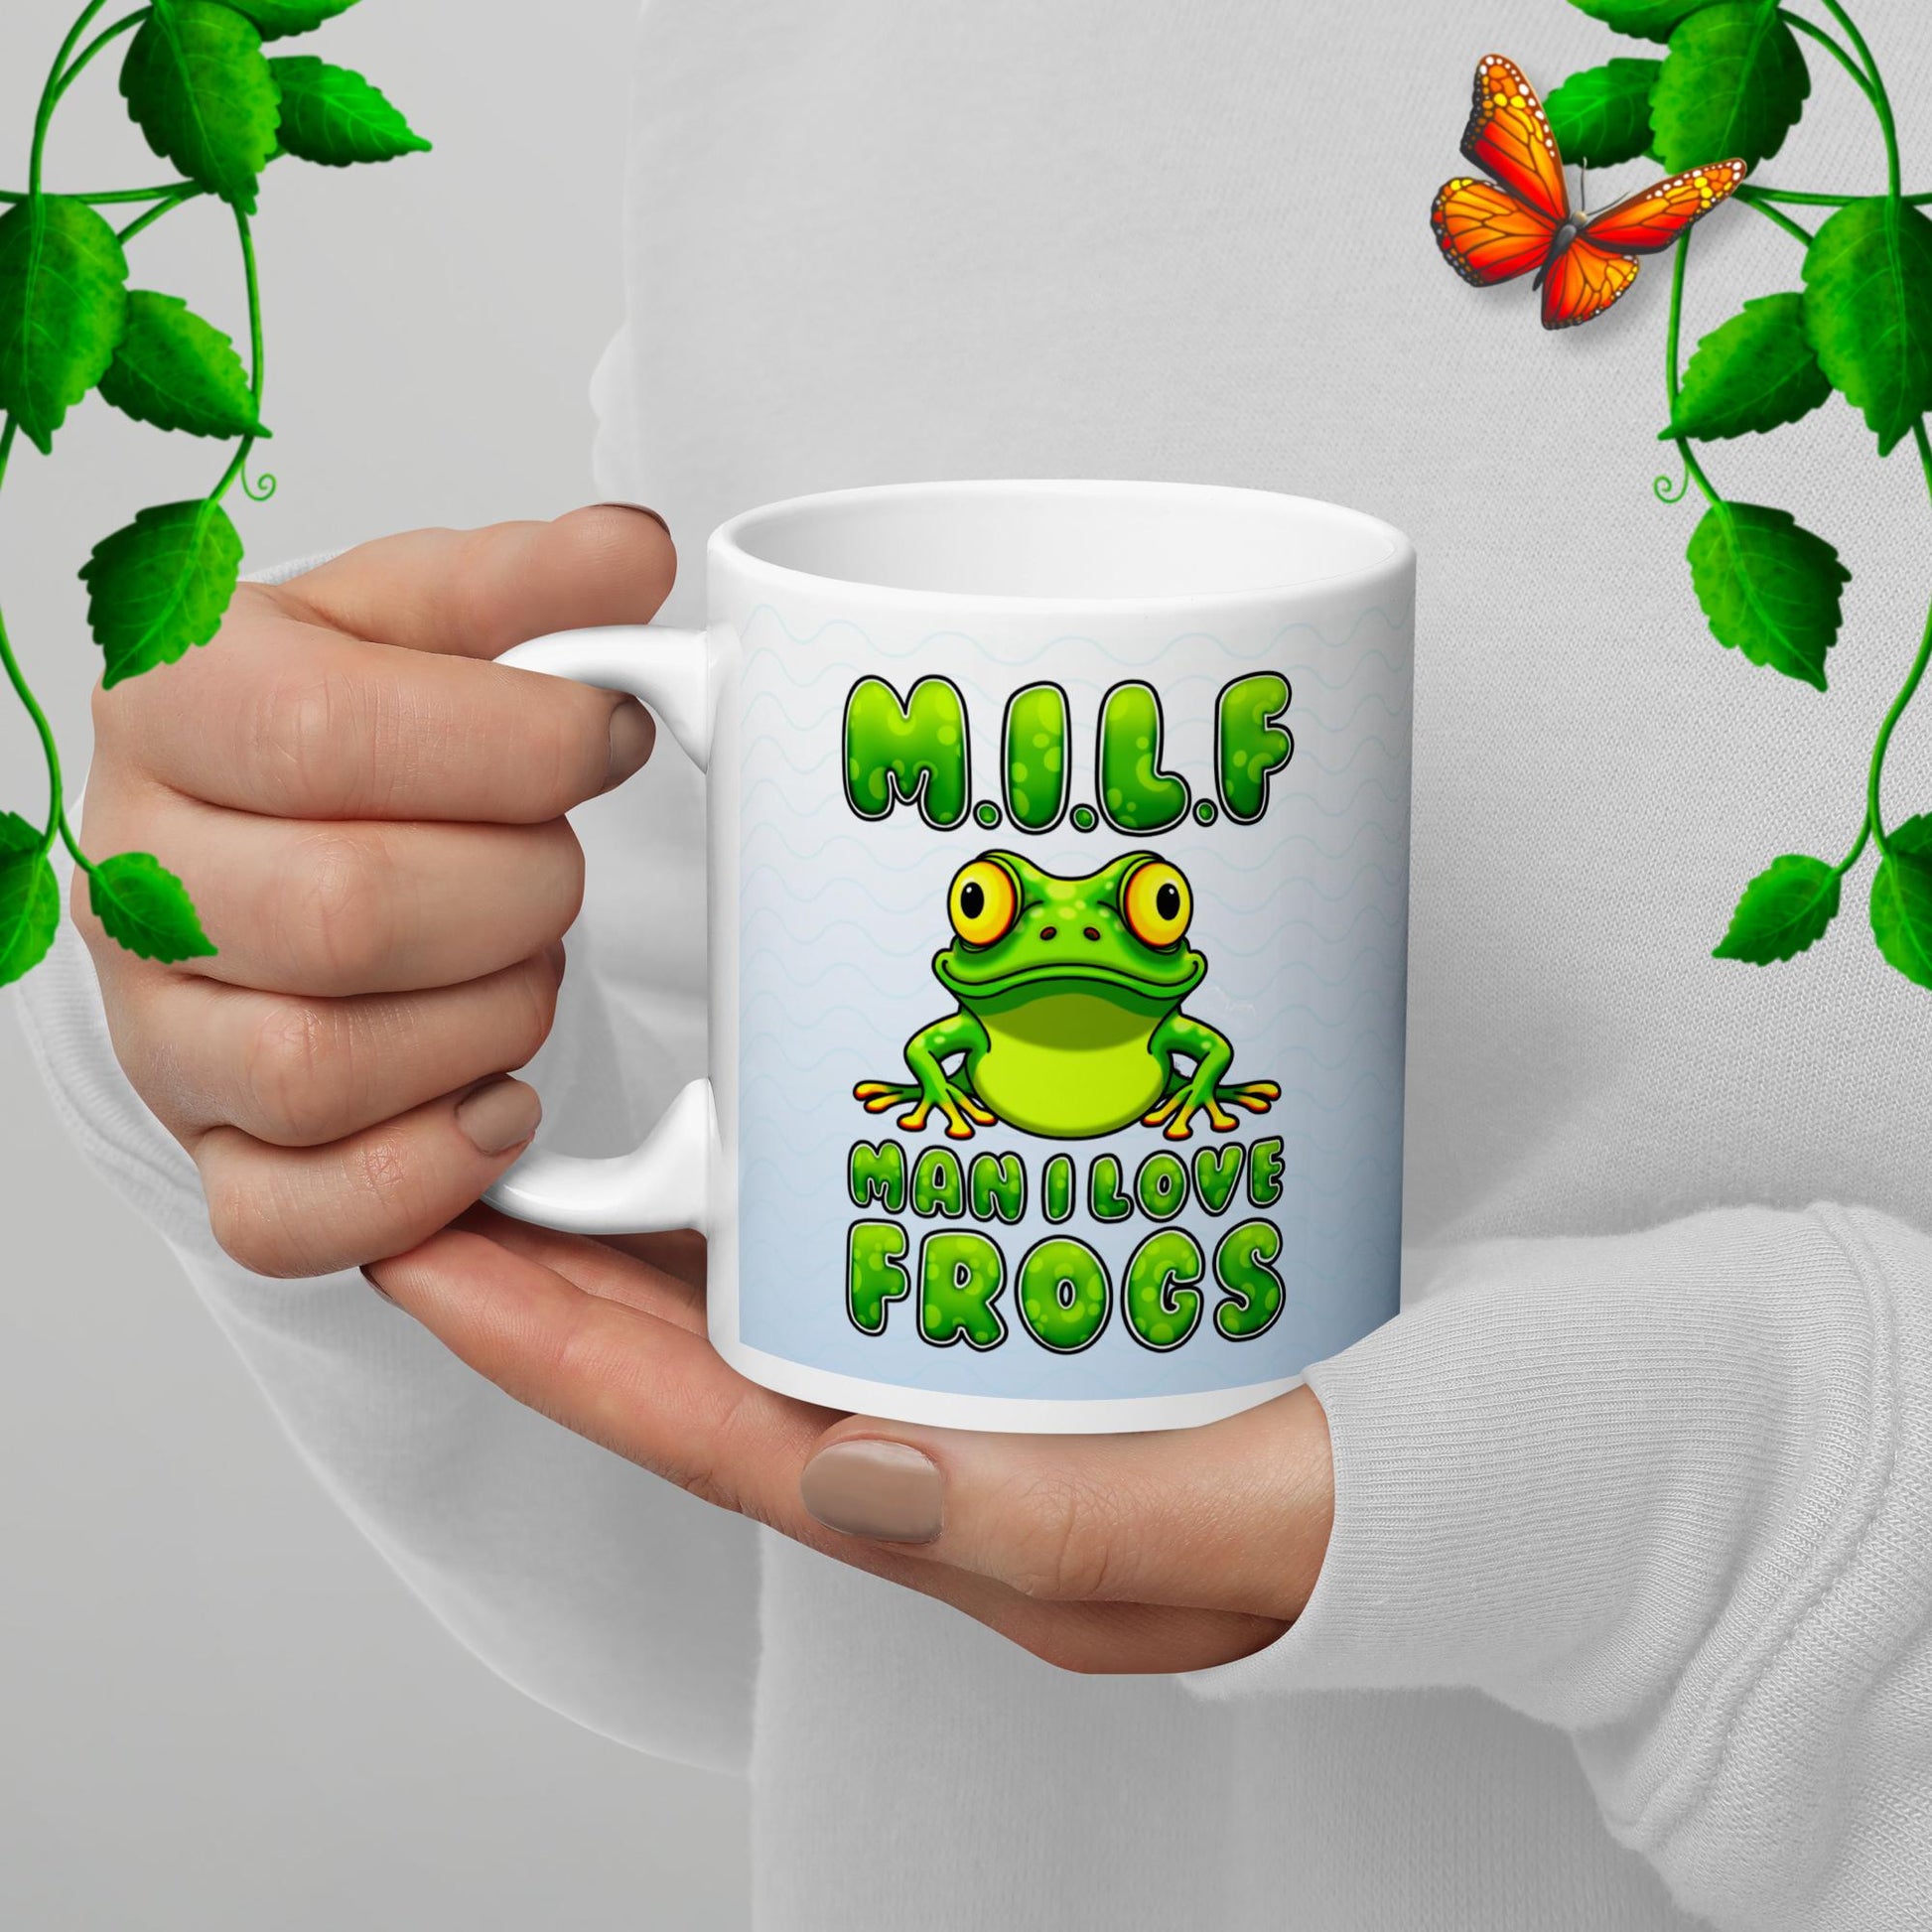 Man I Love Frogs MILF Mug Light Blue By Stormseye Design